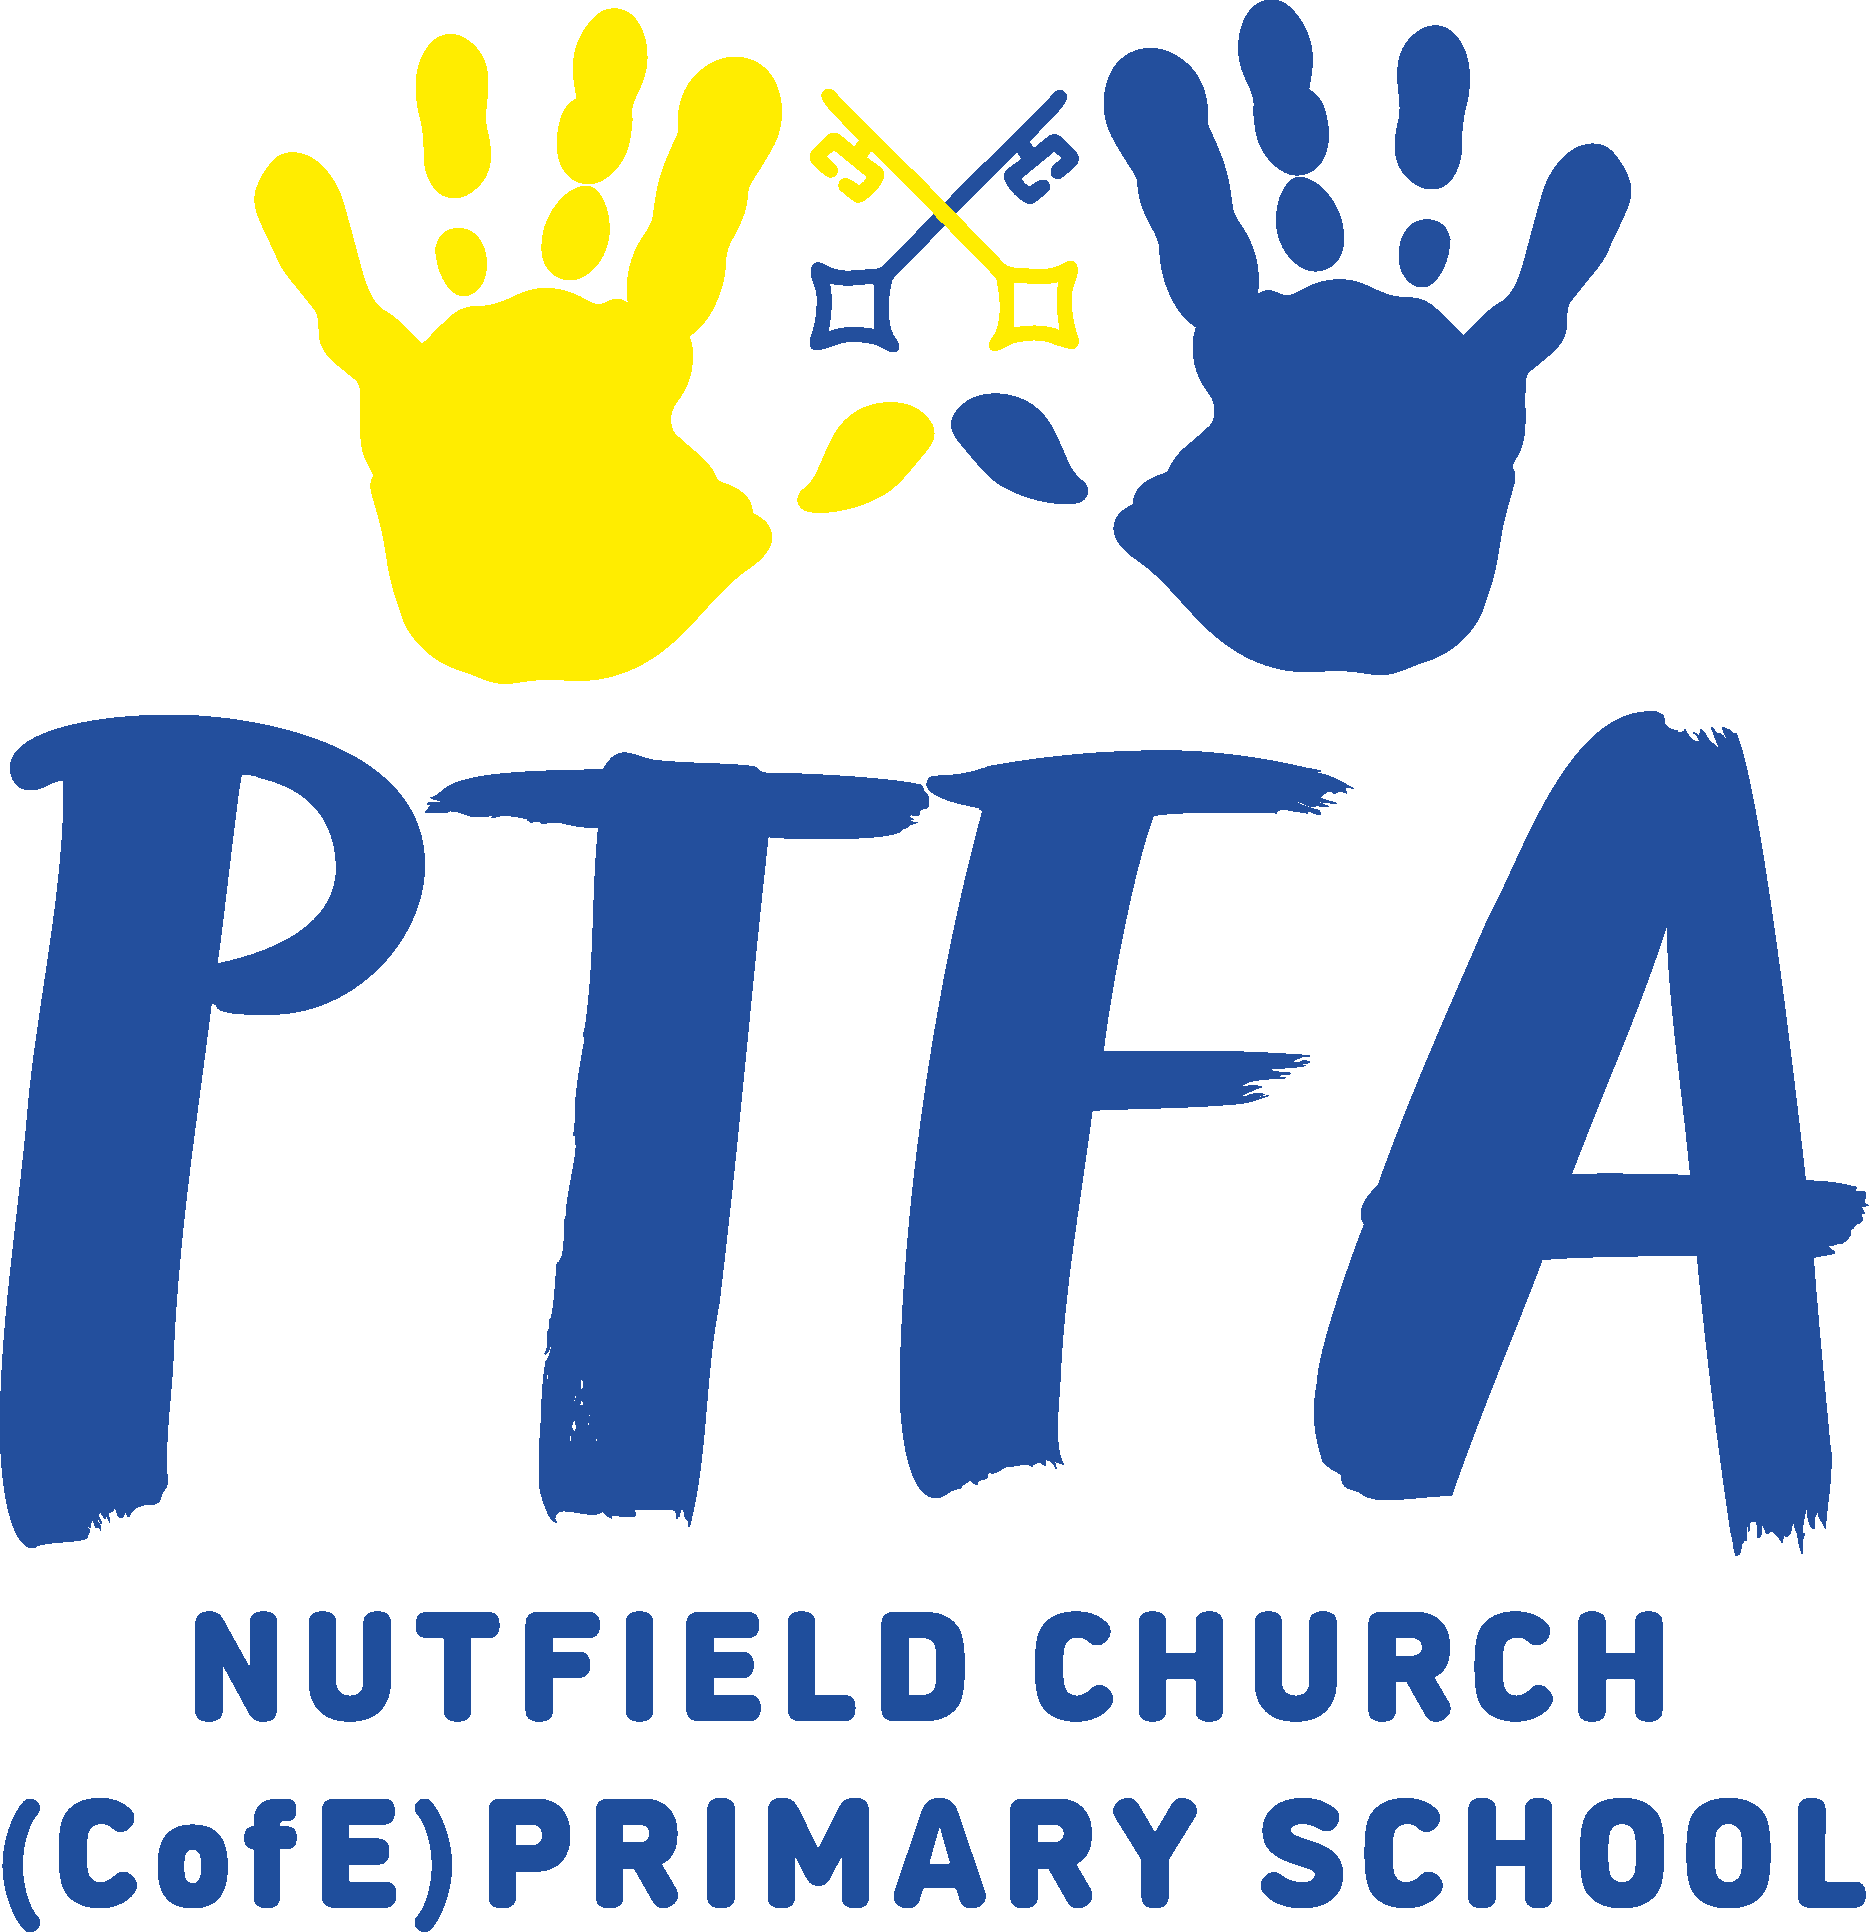 Nutfield Church PTFA